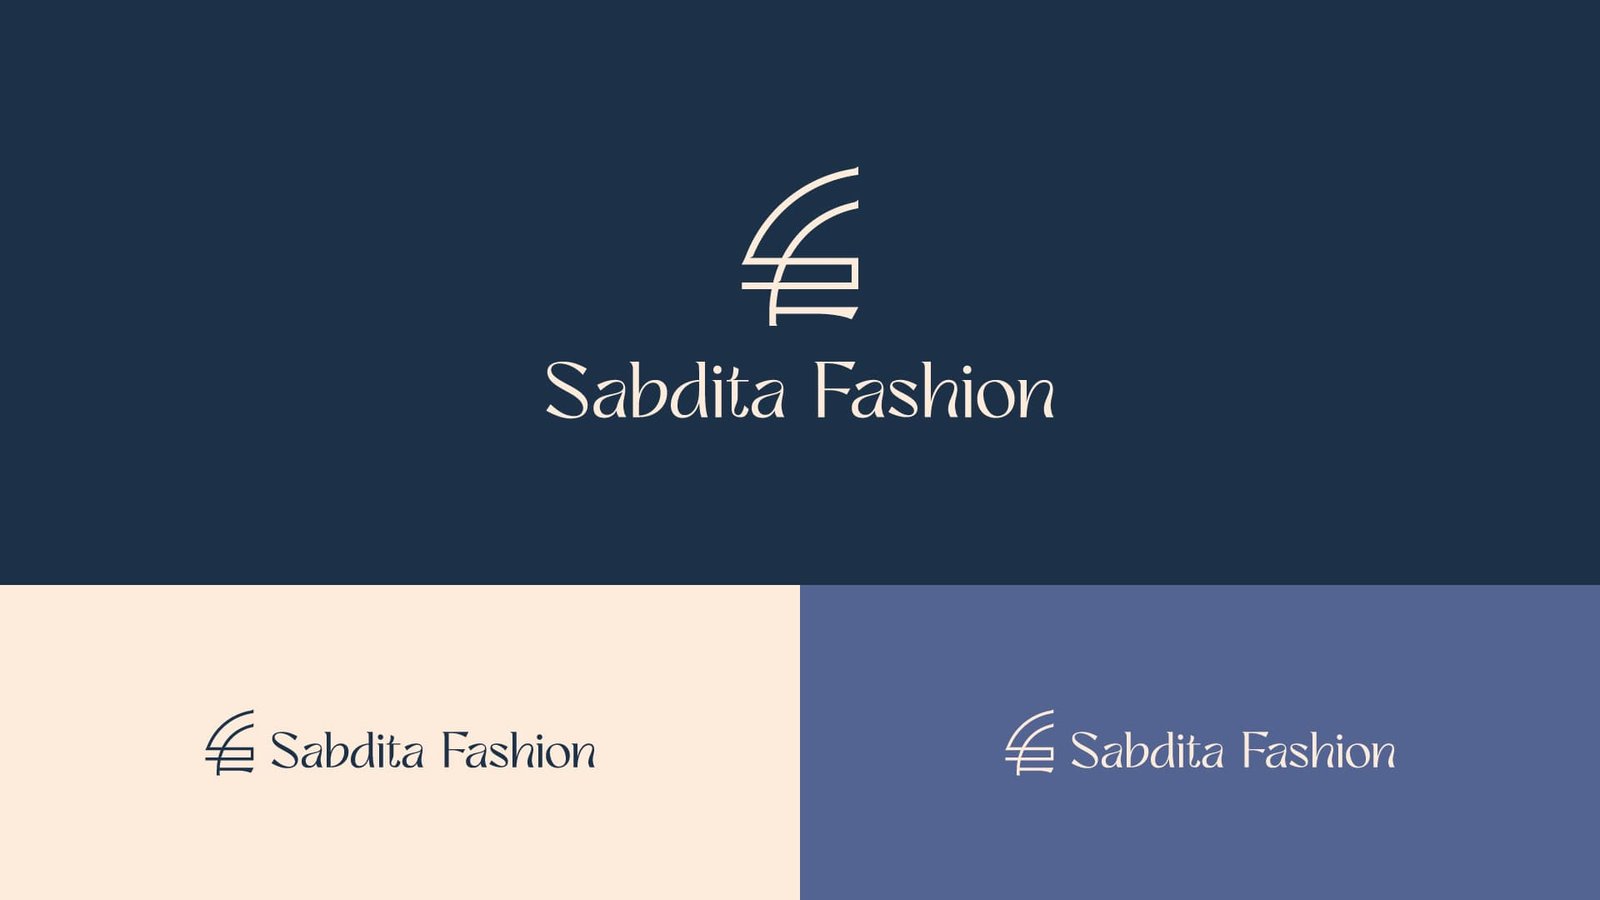 Sabdita Fashion logo mockup